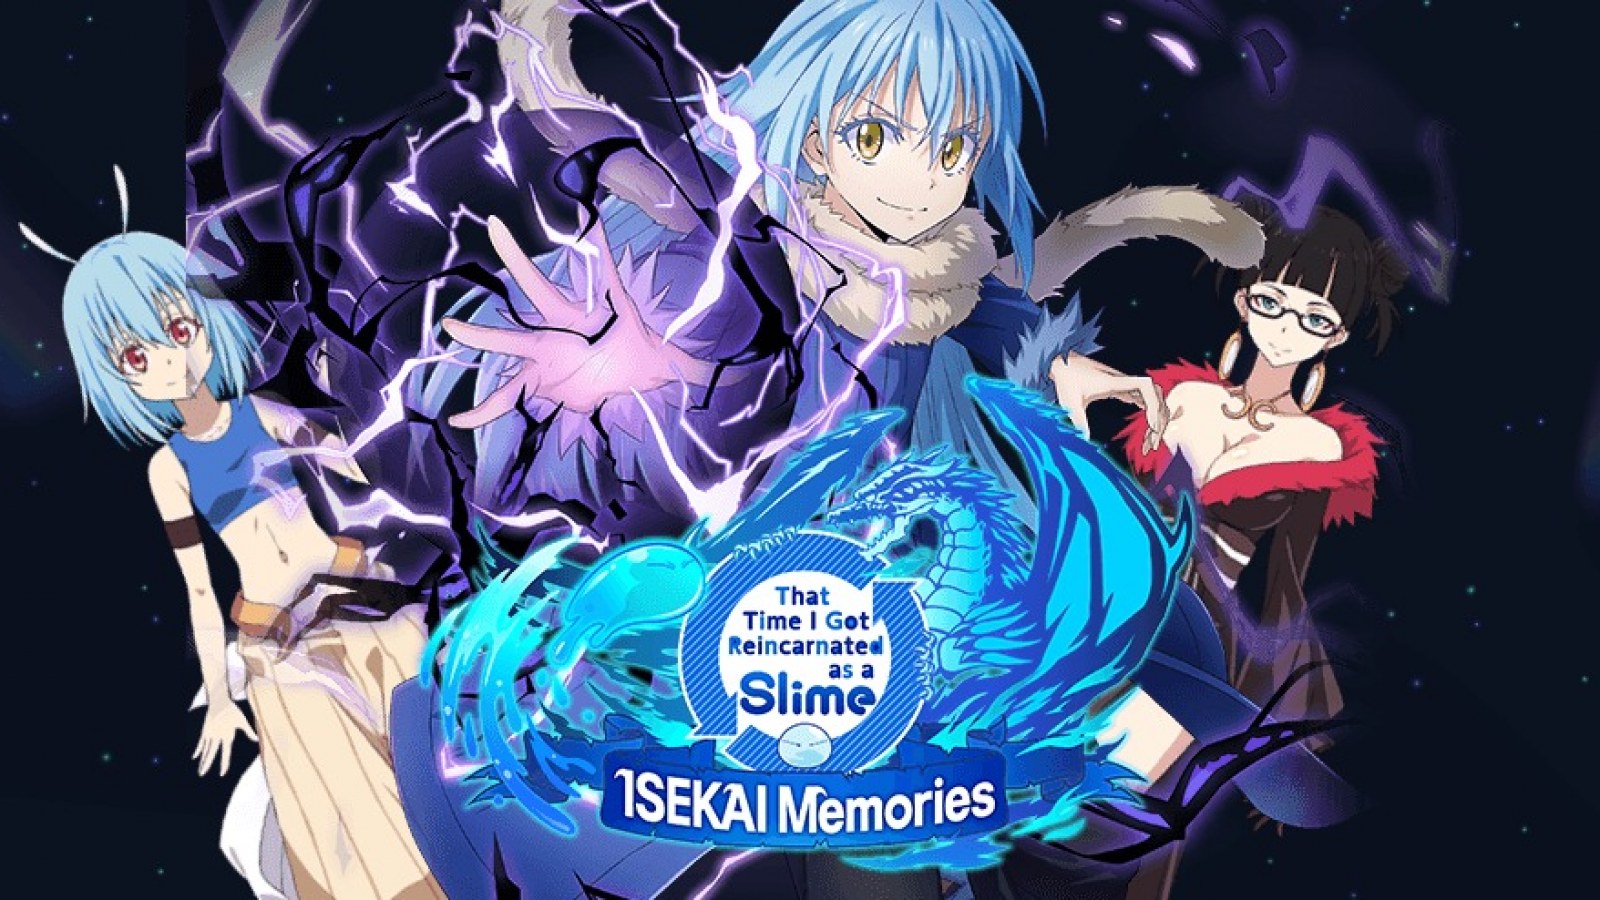 That Time I Got Reincarnated as a Slime: Isekai Memories